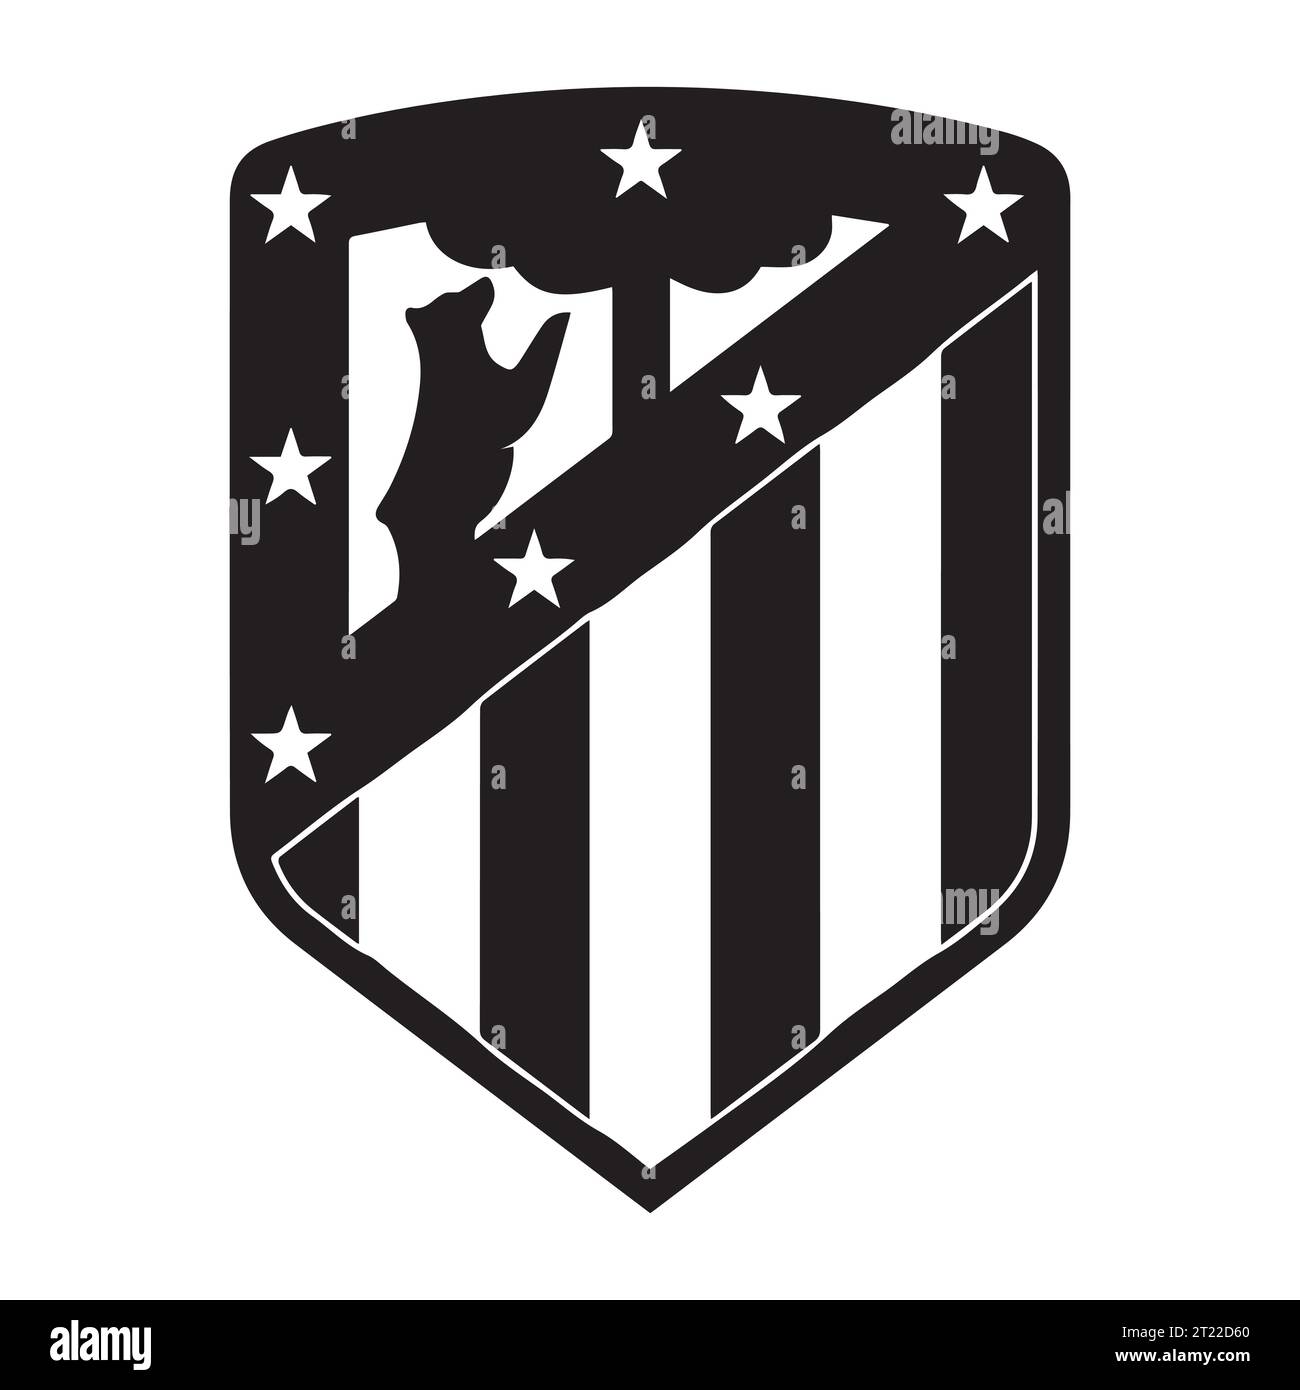 Atletico Madrid Black and White Logo Spain professional football club, Vector Illustration Abstract Black and White Editable image Stock Vector